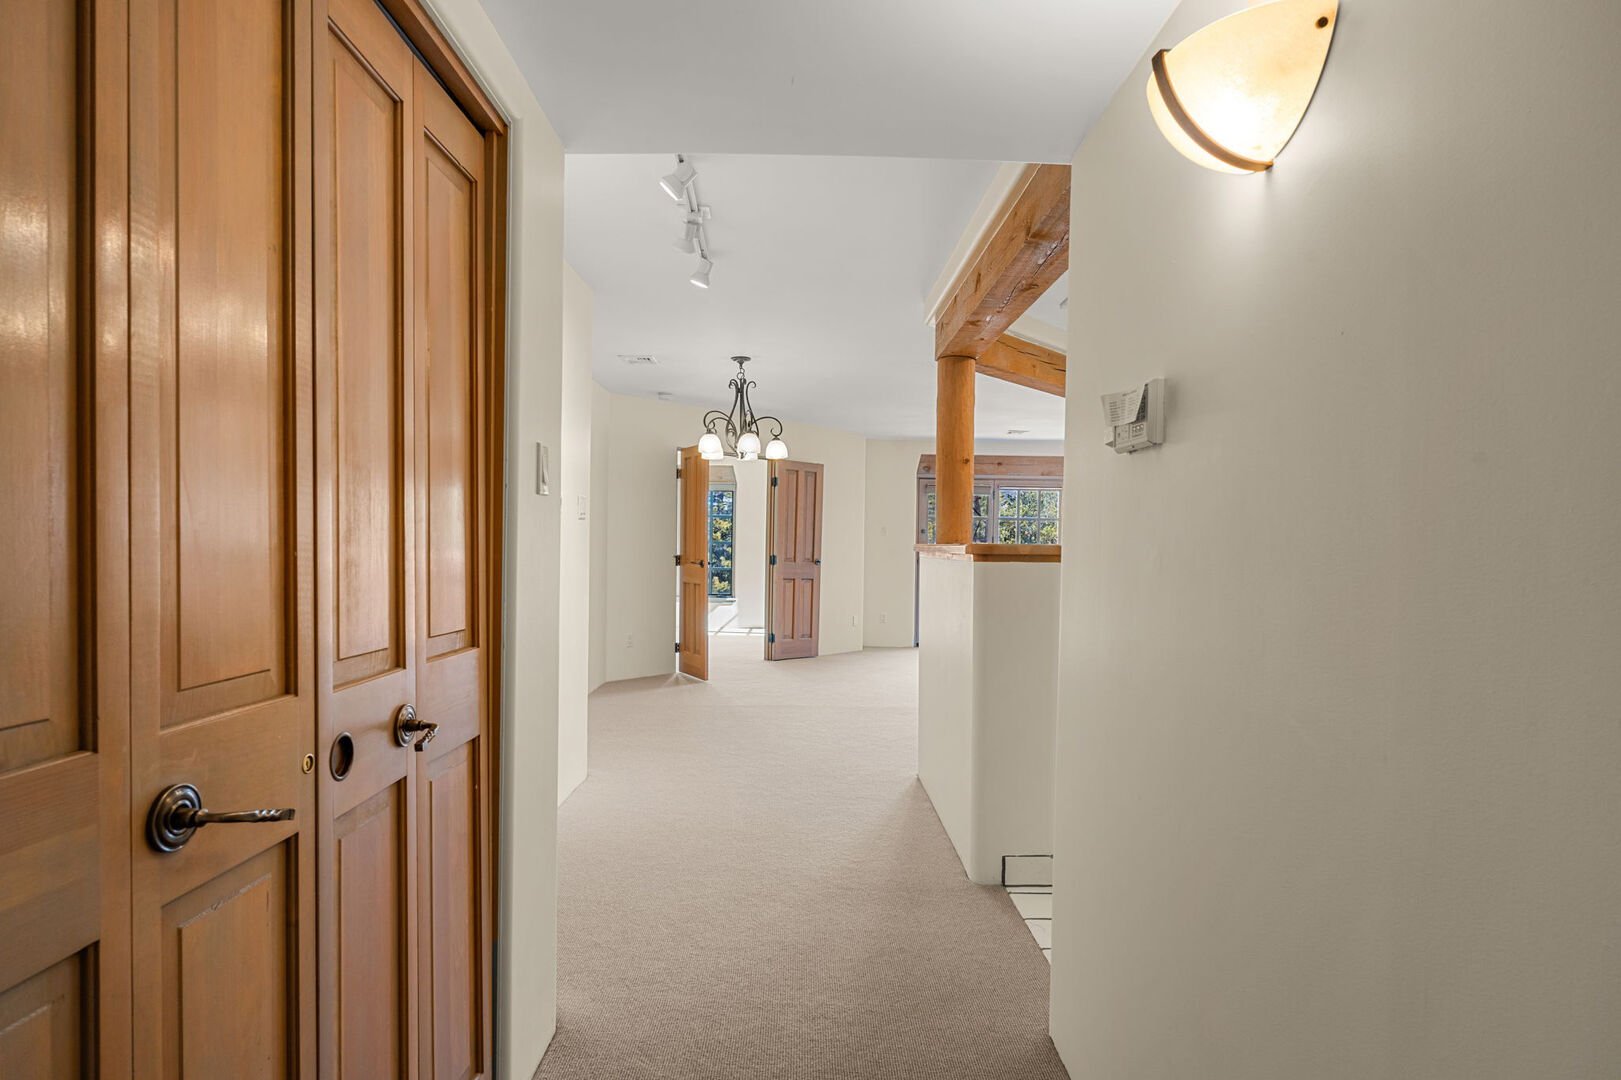 Hallway / Entry